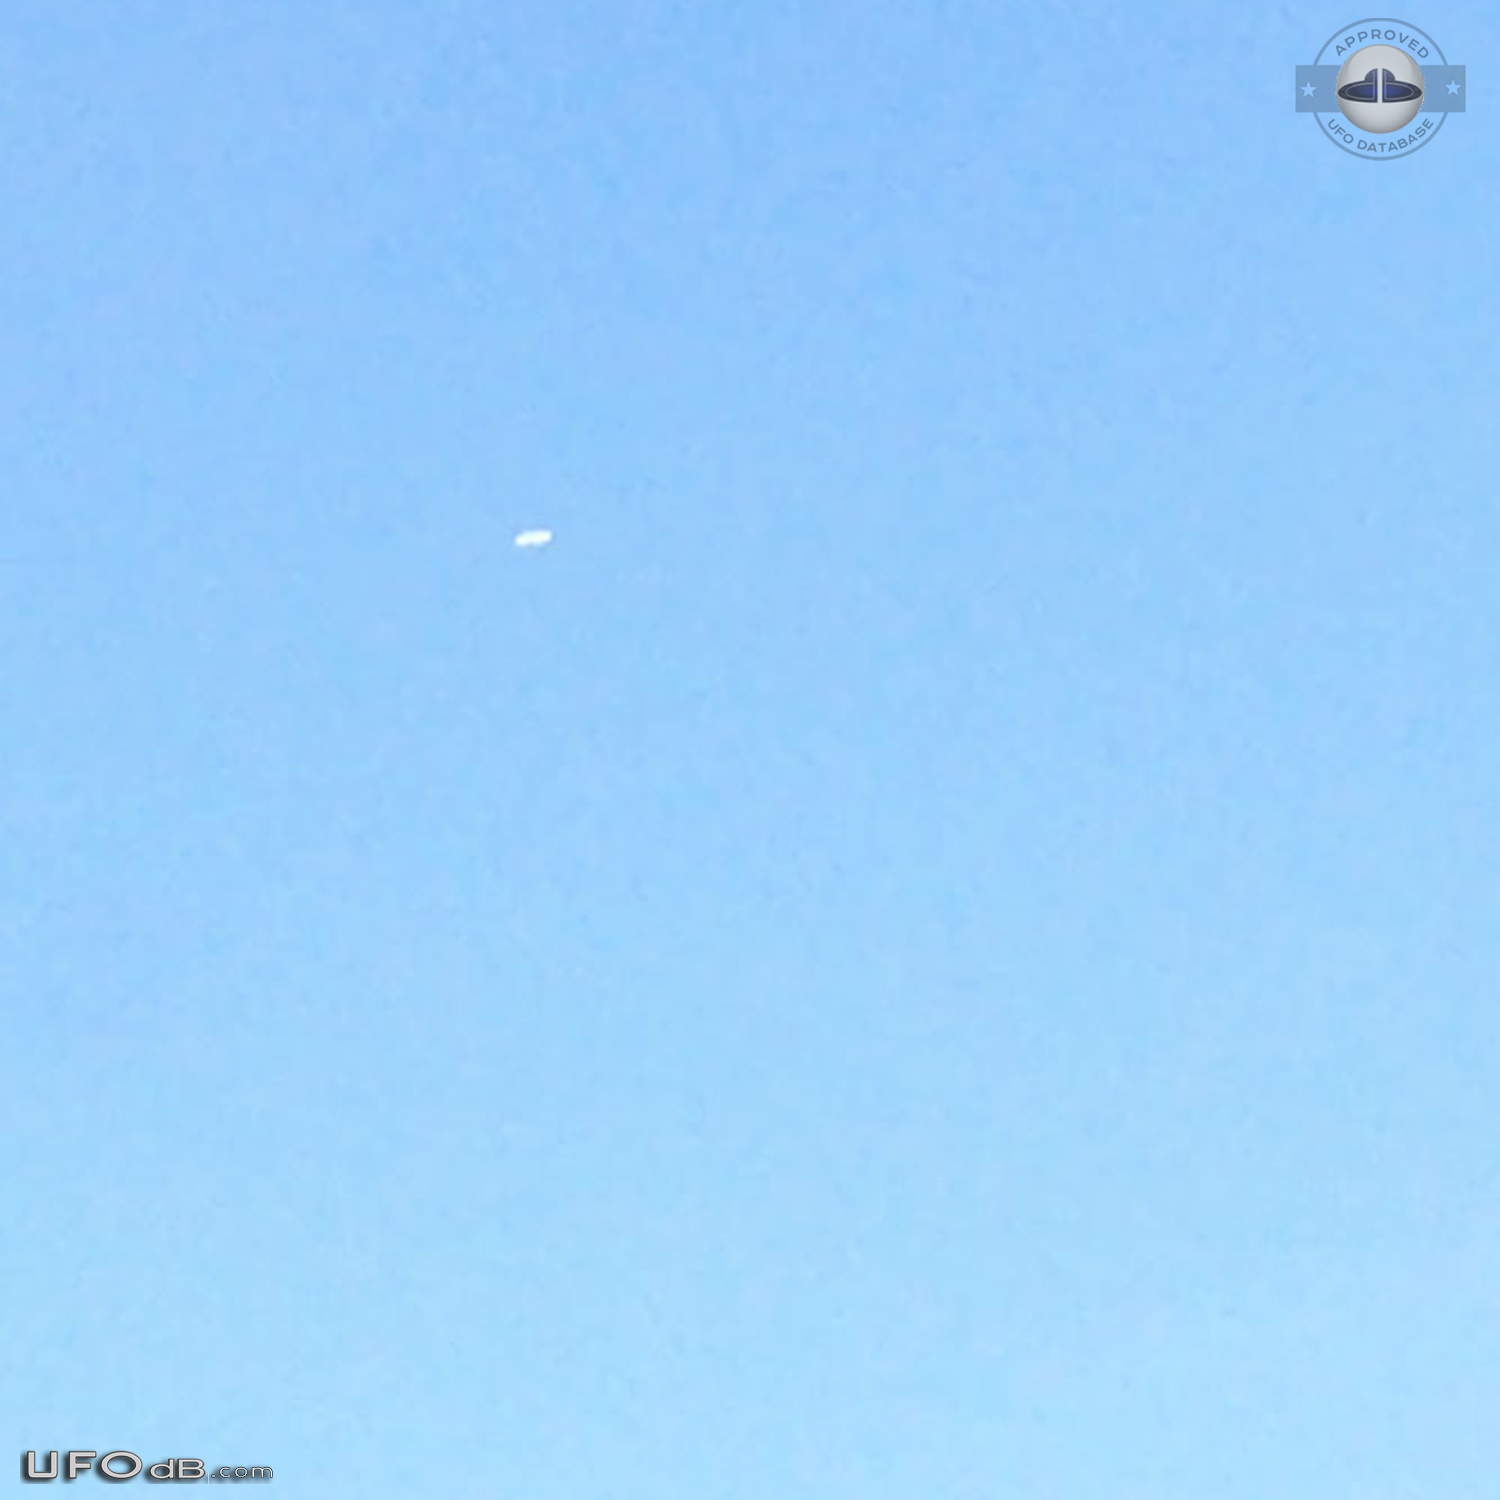 Saucer UFO seen on travelling train in Edinburgh Scotland January 2014 UFO Picture #654-2